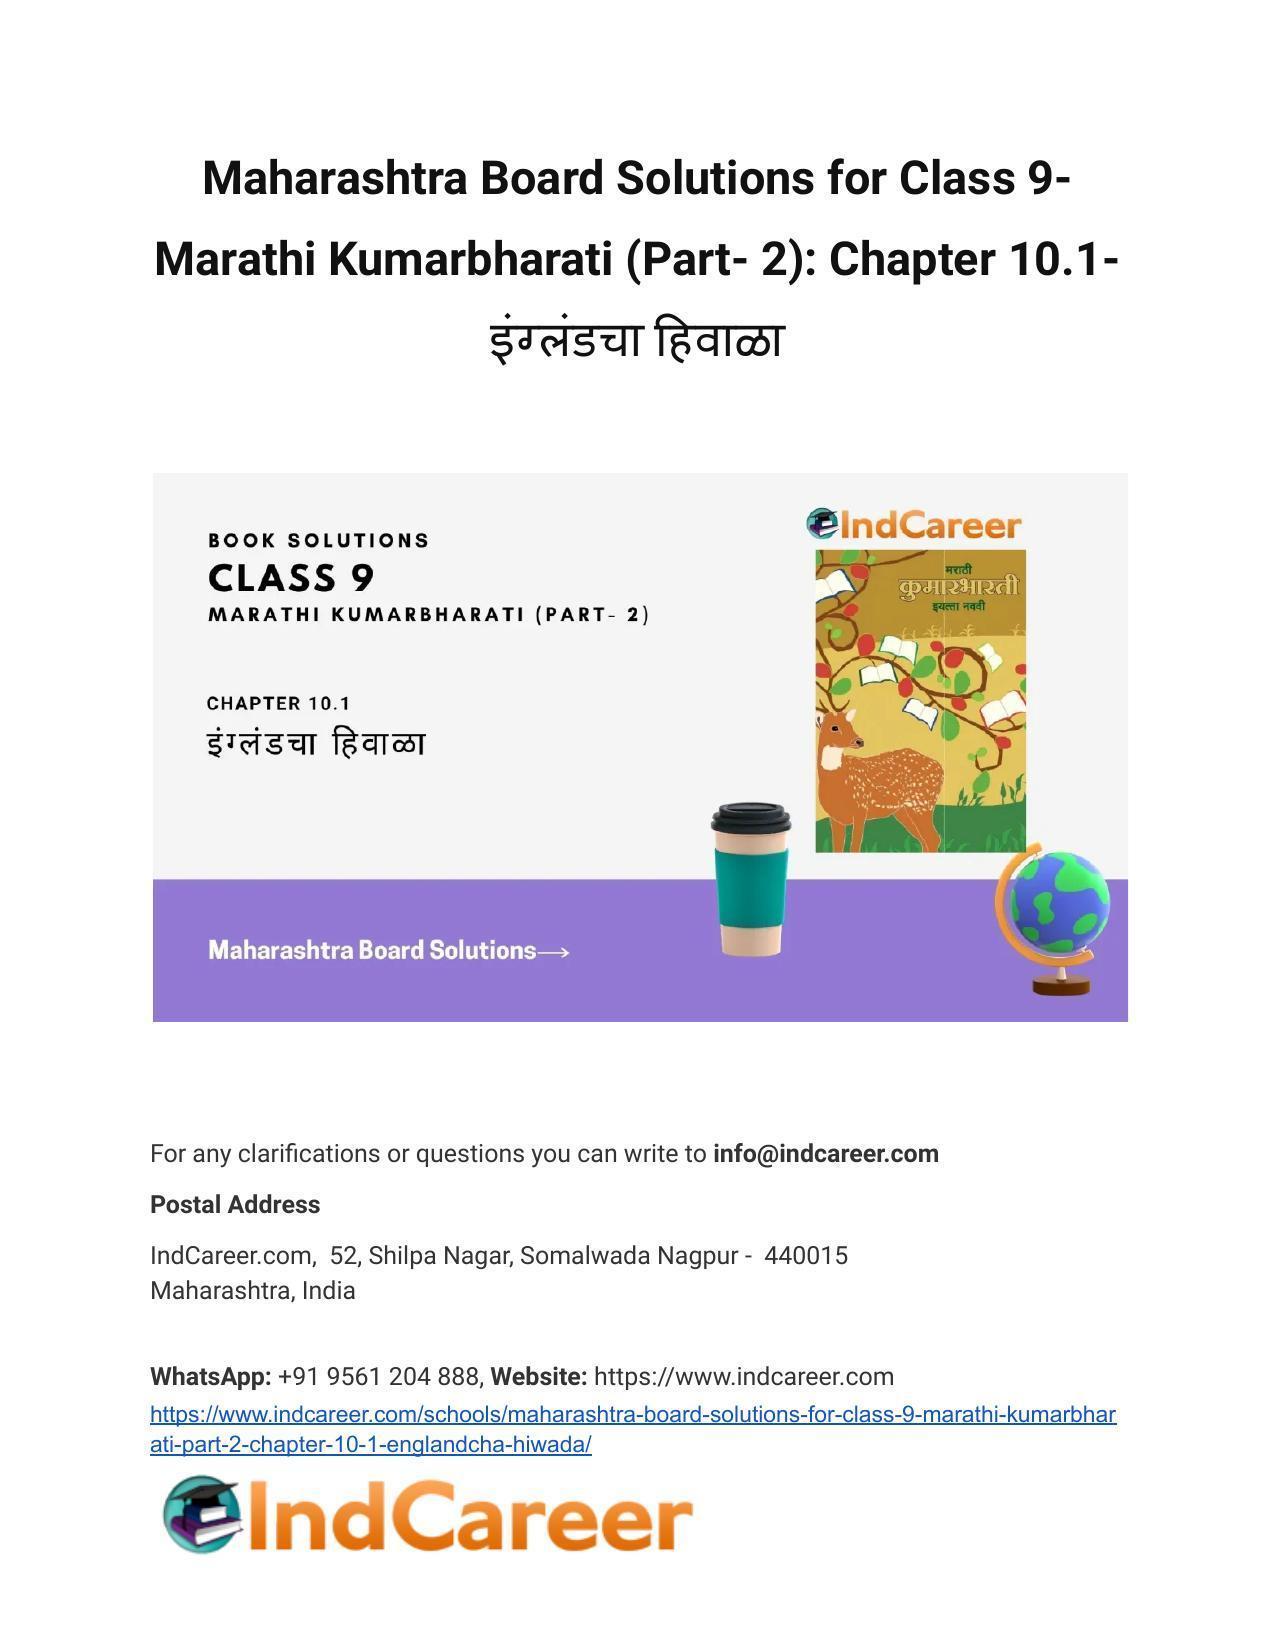 Maharashtra Board Solutions for Class 9- Marathi Kumarbharati (Part- 2): Chapter 10.1- इंग्लंडचा हिवाळा - Page 1